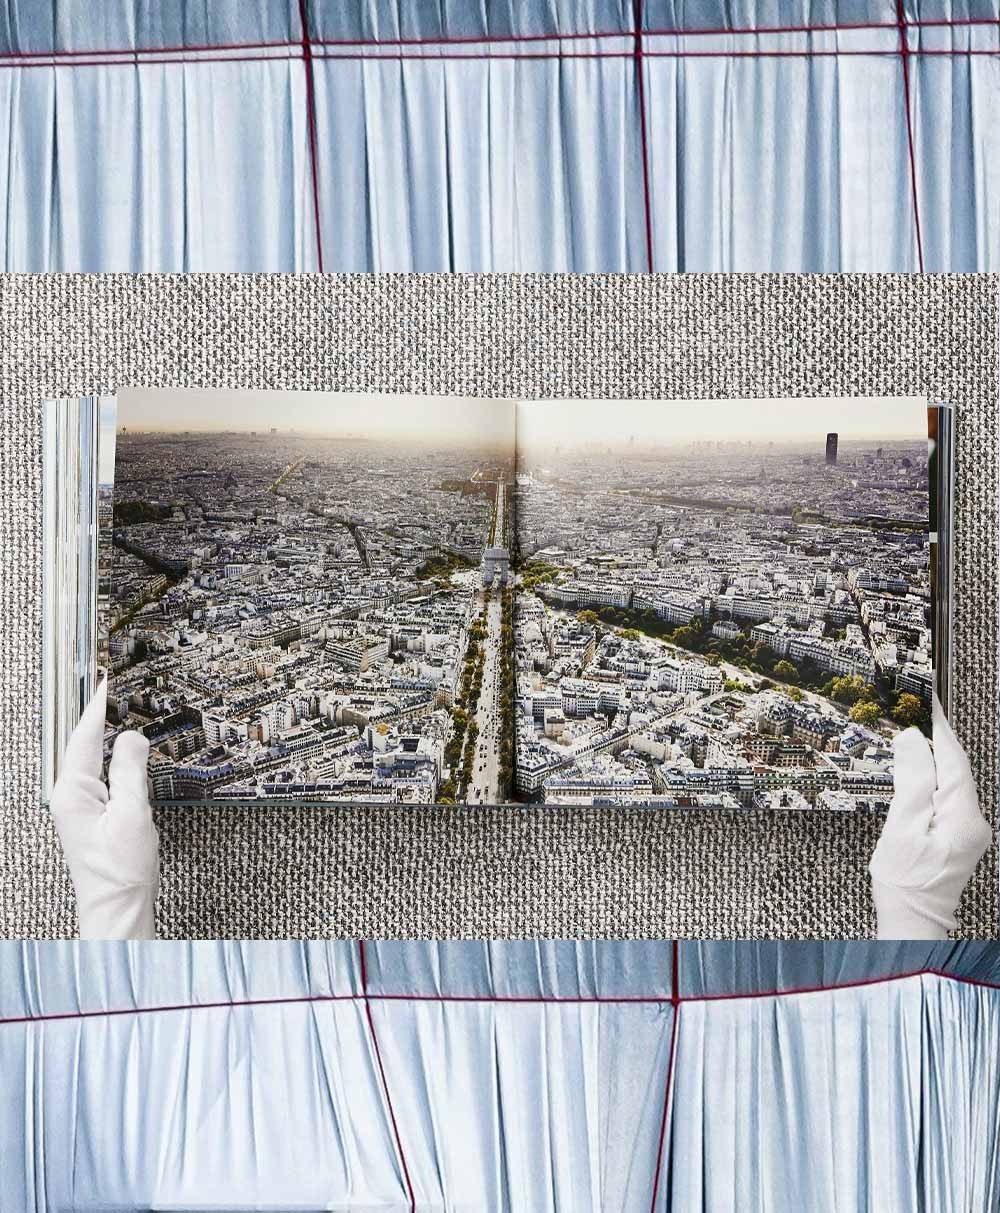 Produktbild des Bildbandes Christo and Jeanne-Claude. L'Arc de Triomphe, Wrapped, Paris vom Taschen Verlag - RAUM concept store